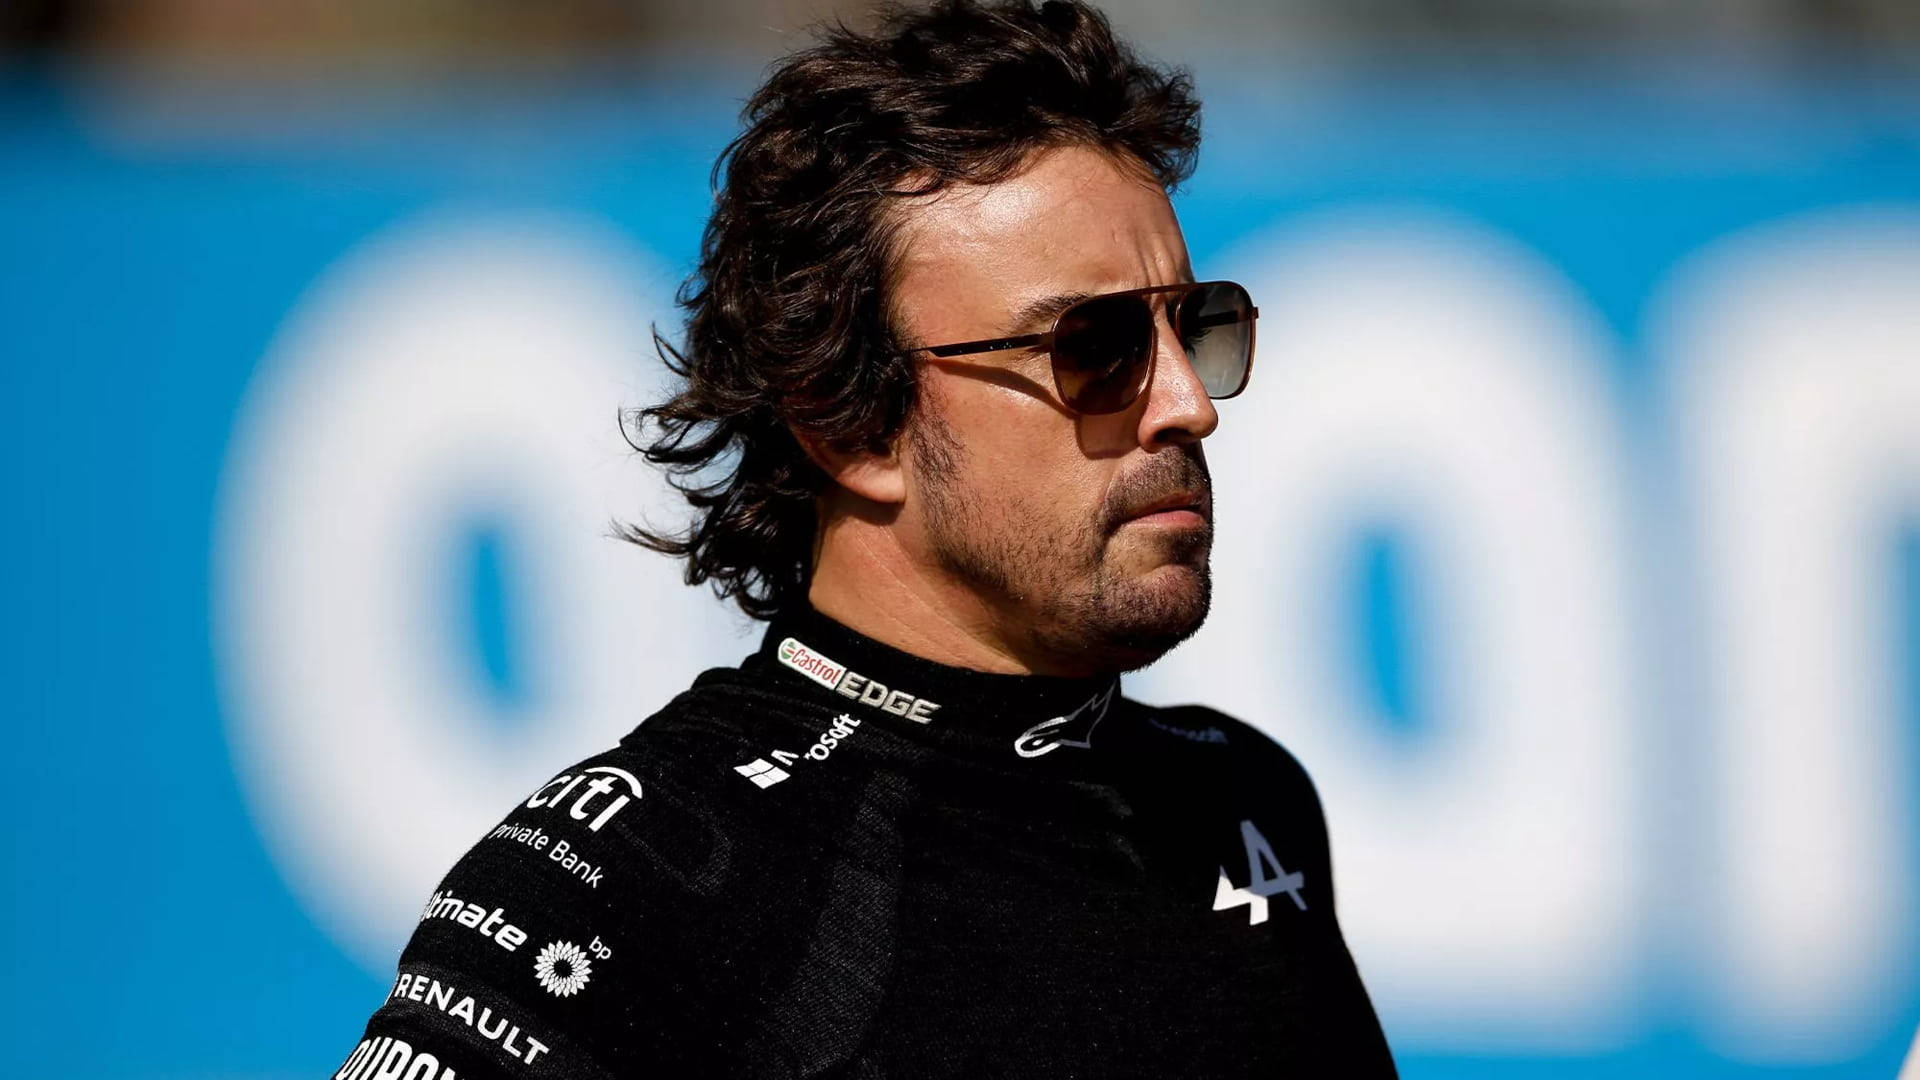 Sindsro Bolt deform Download Fernando Alonso Dark Sunglasses Wallpaper | Wallpapers.com